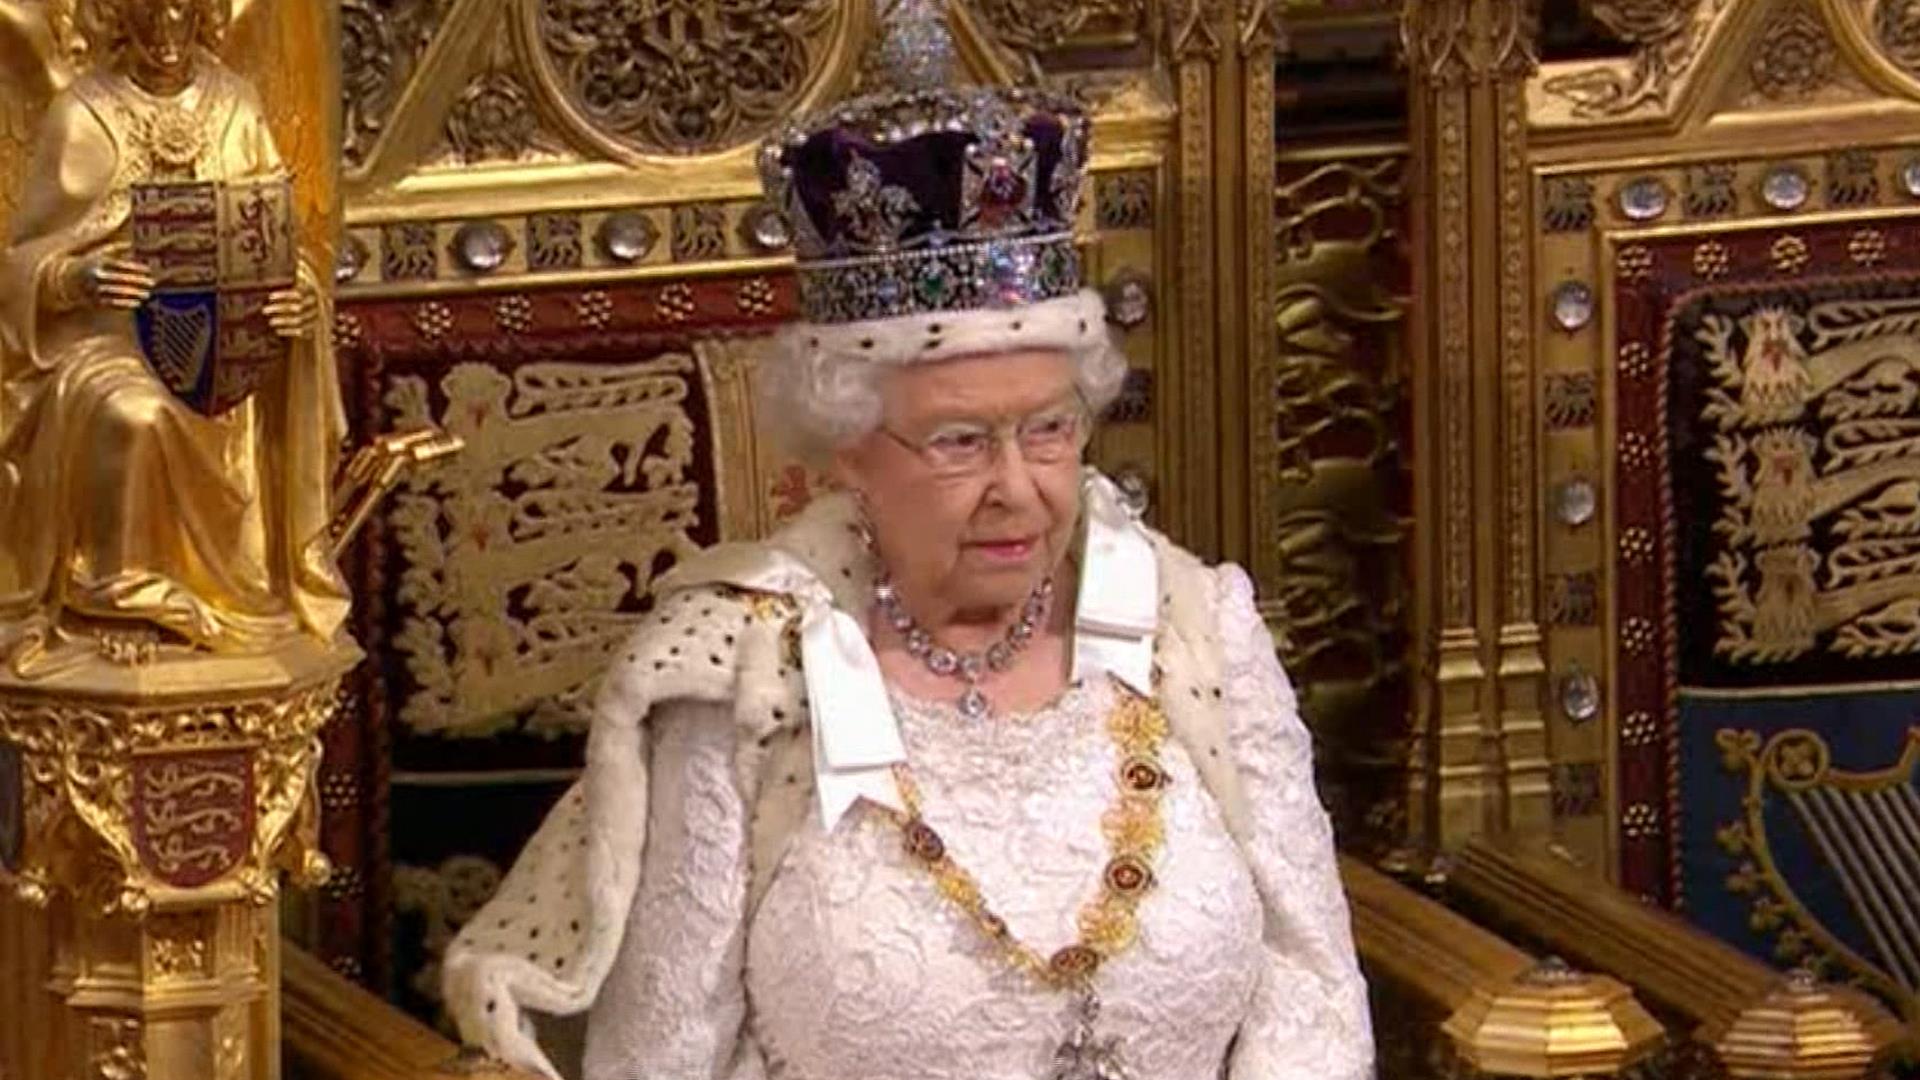 Queen Elizabeth celebrates her 90th birthday (again) - TODAY.com